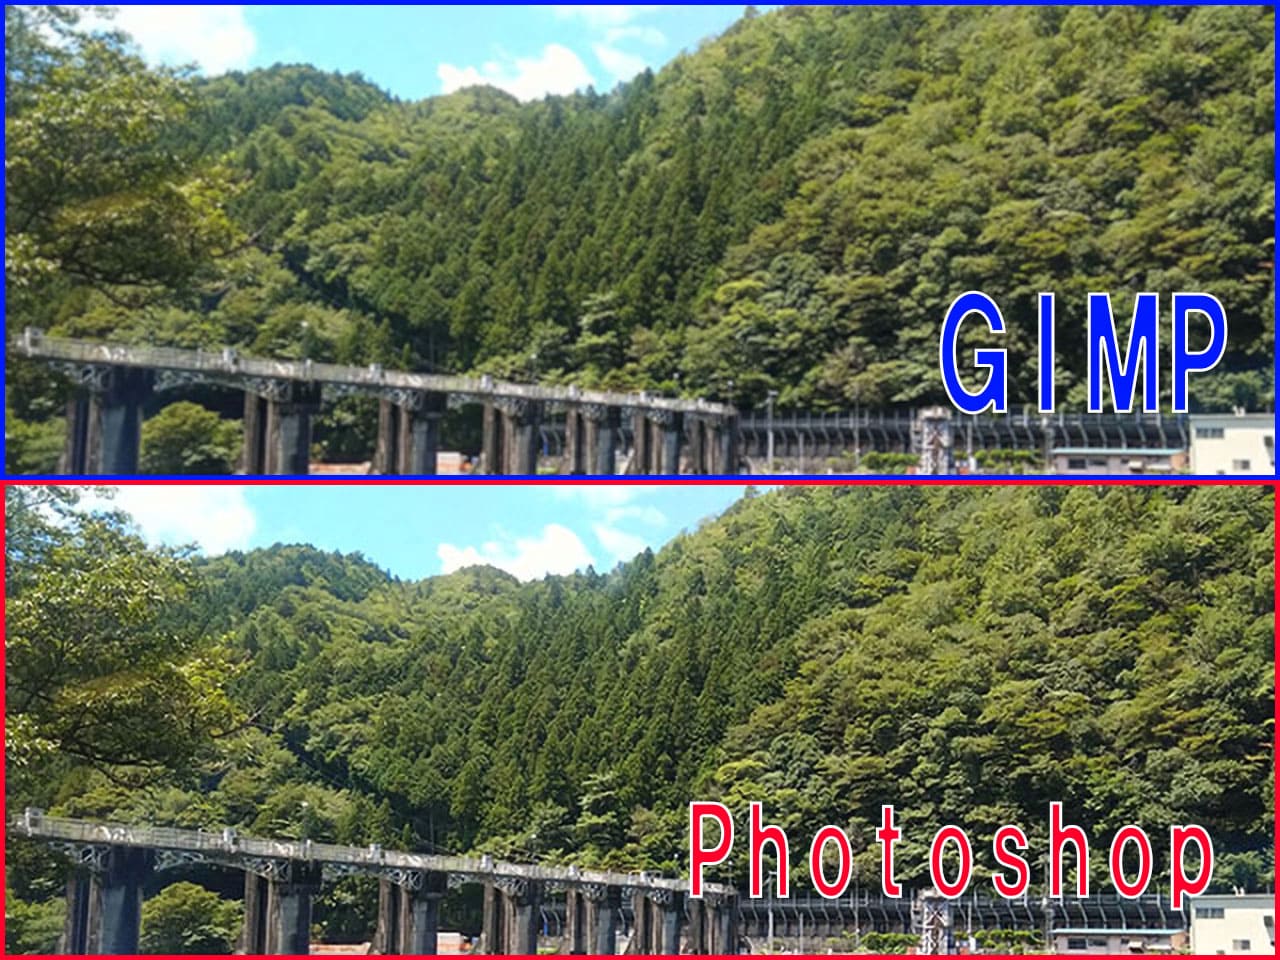 GIMPとフォトショの拡大比較